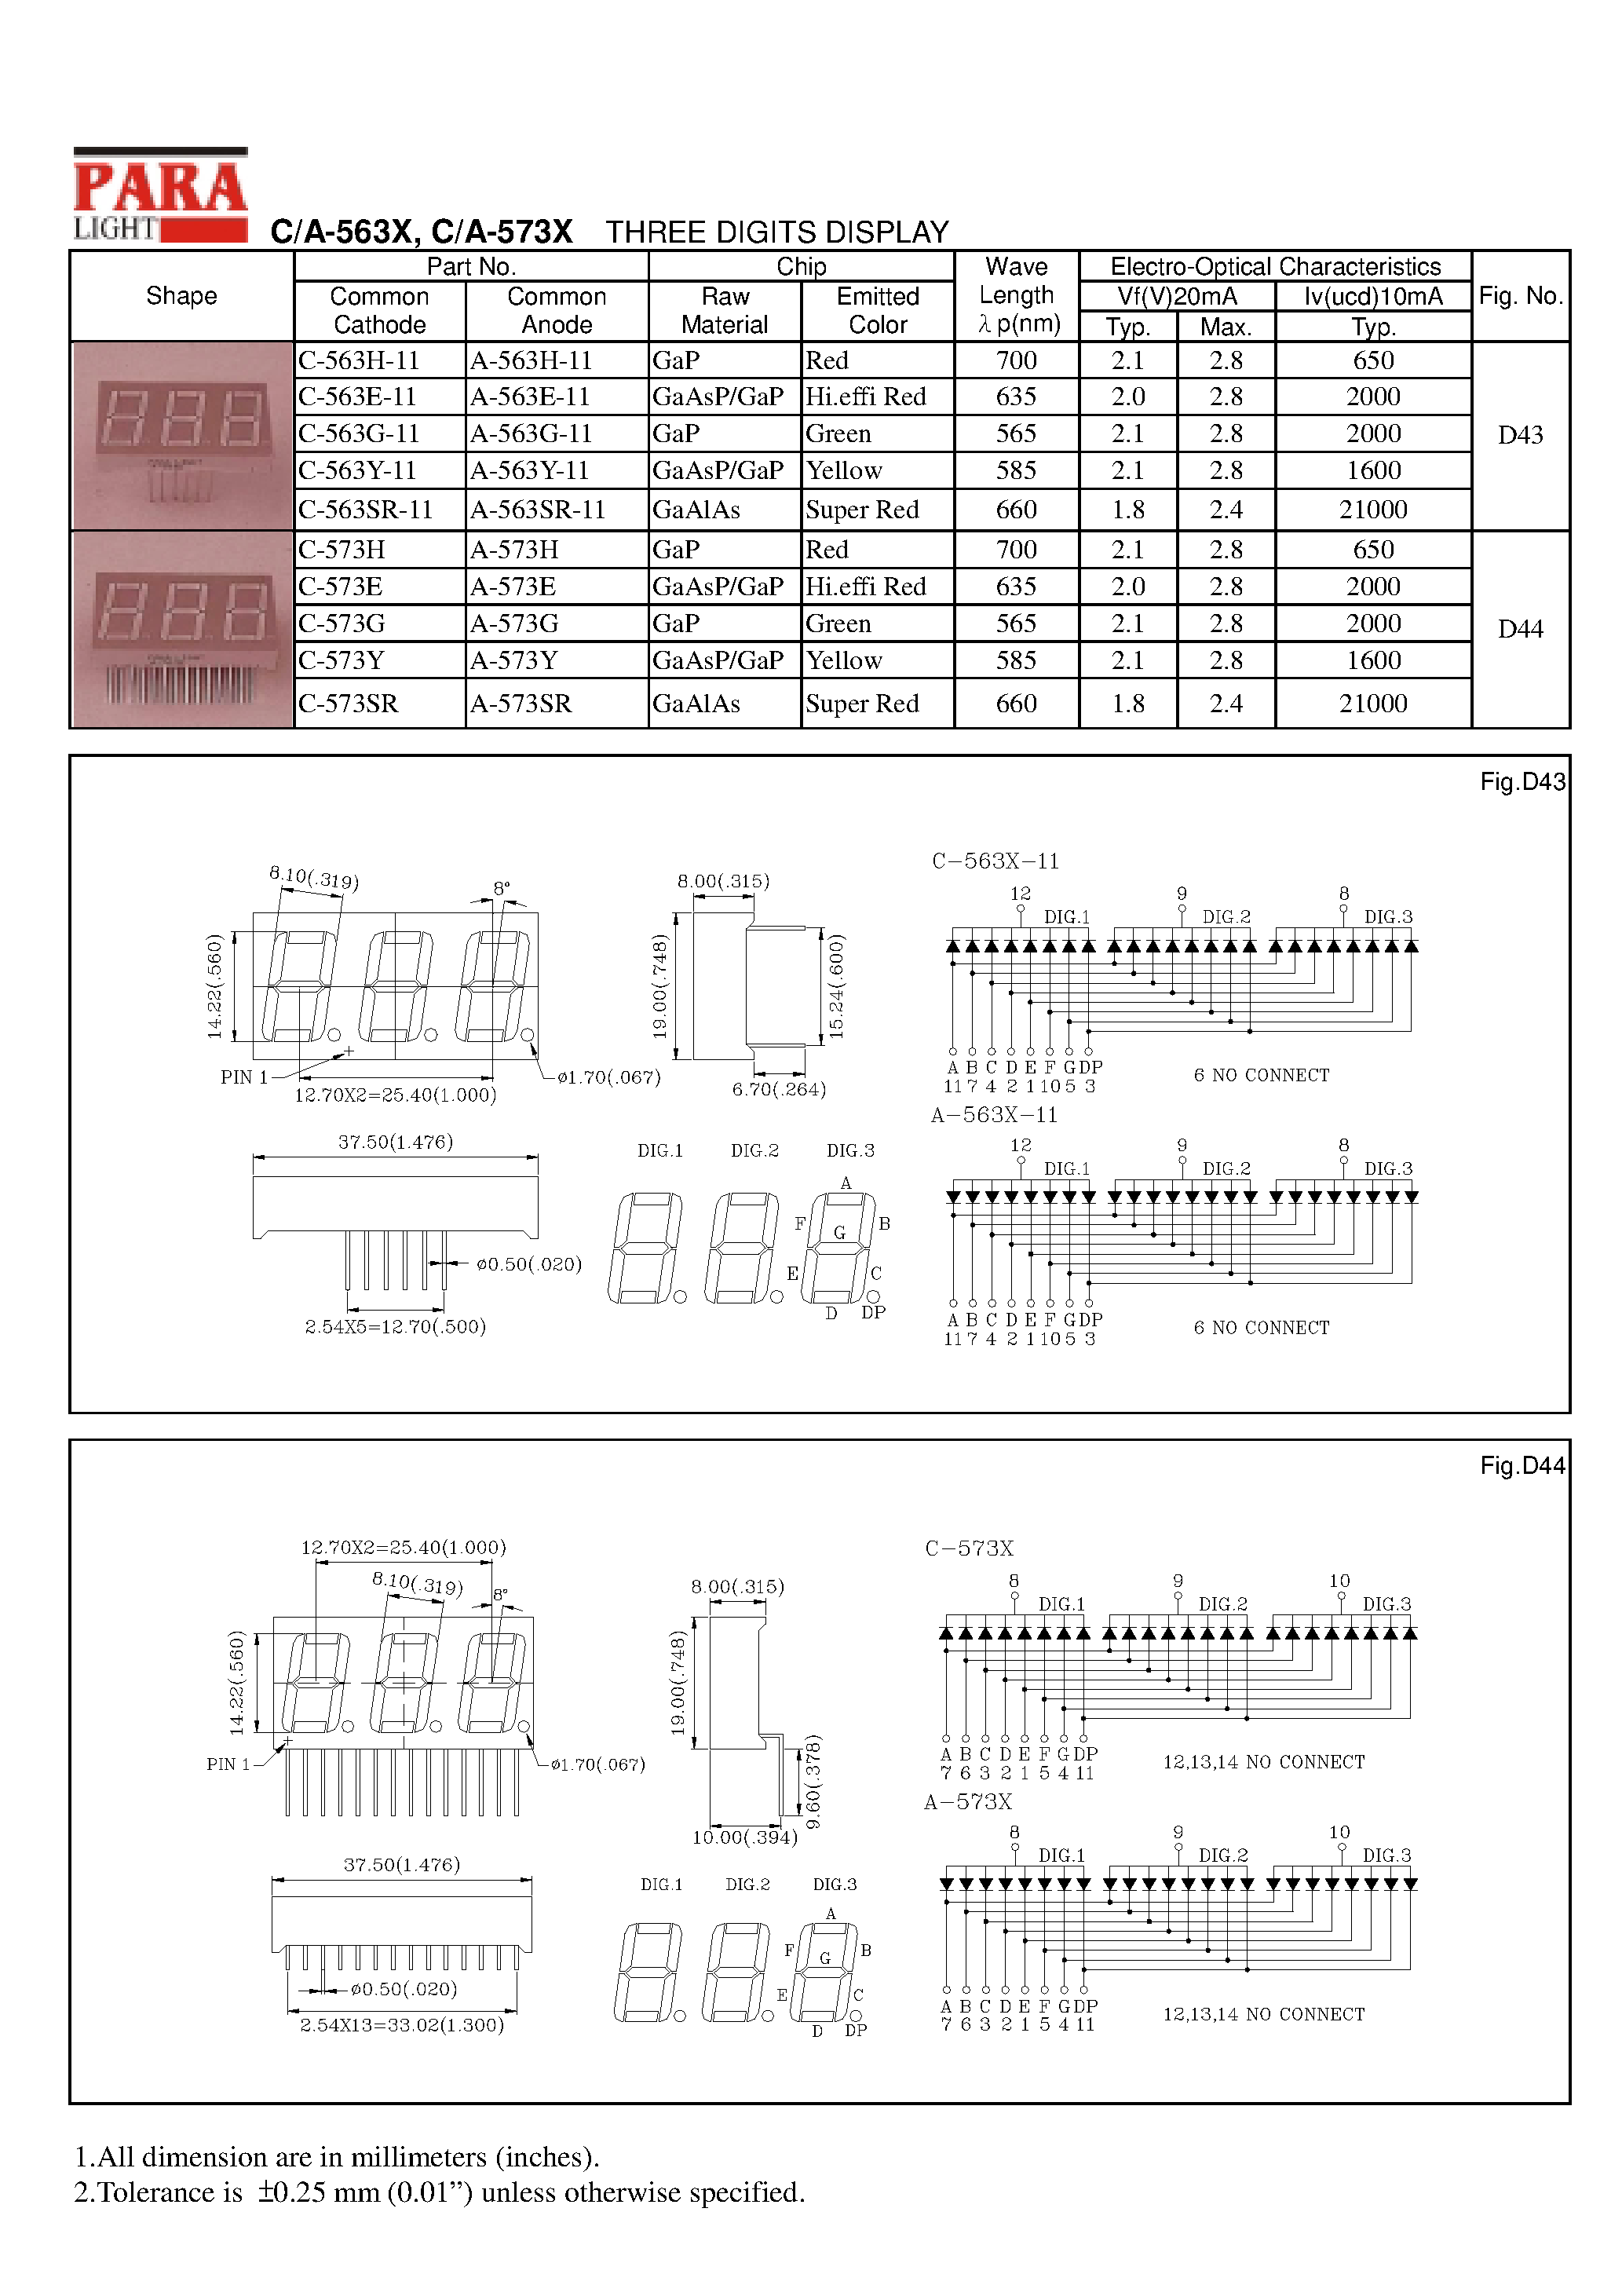 Datasheet A-573Y - THREE DIGITS DISPLAY page 1